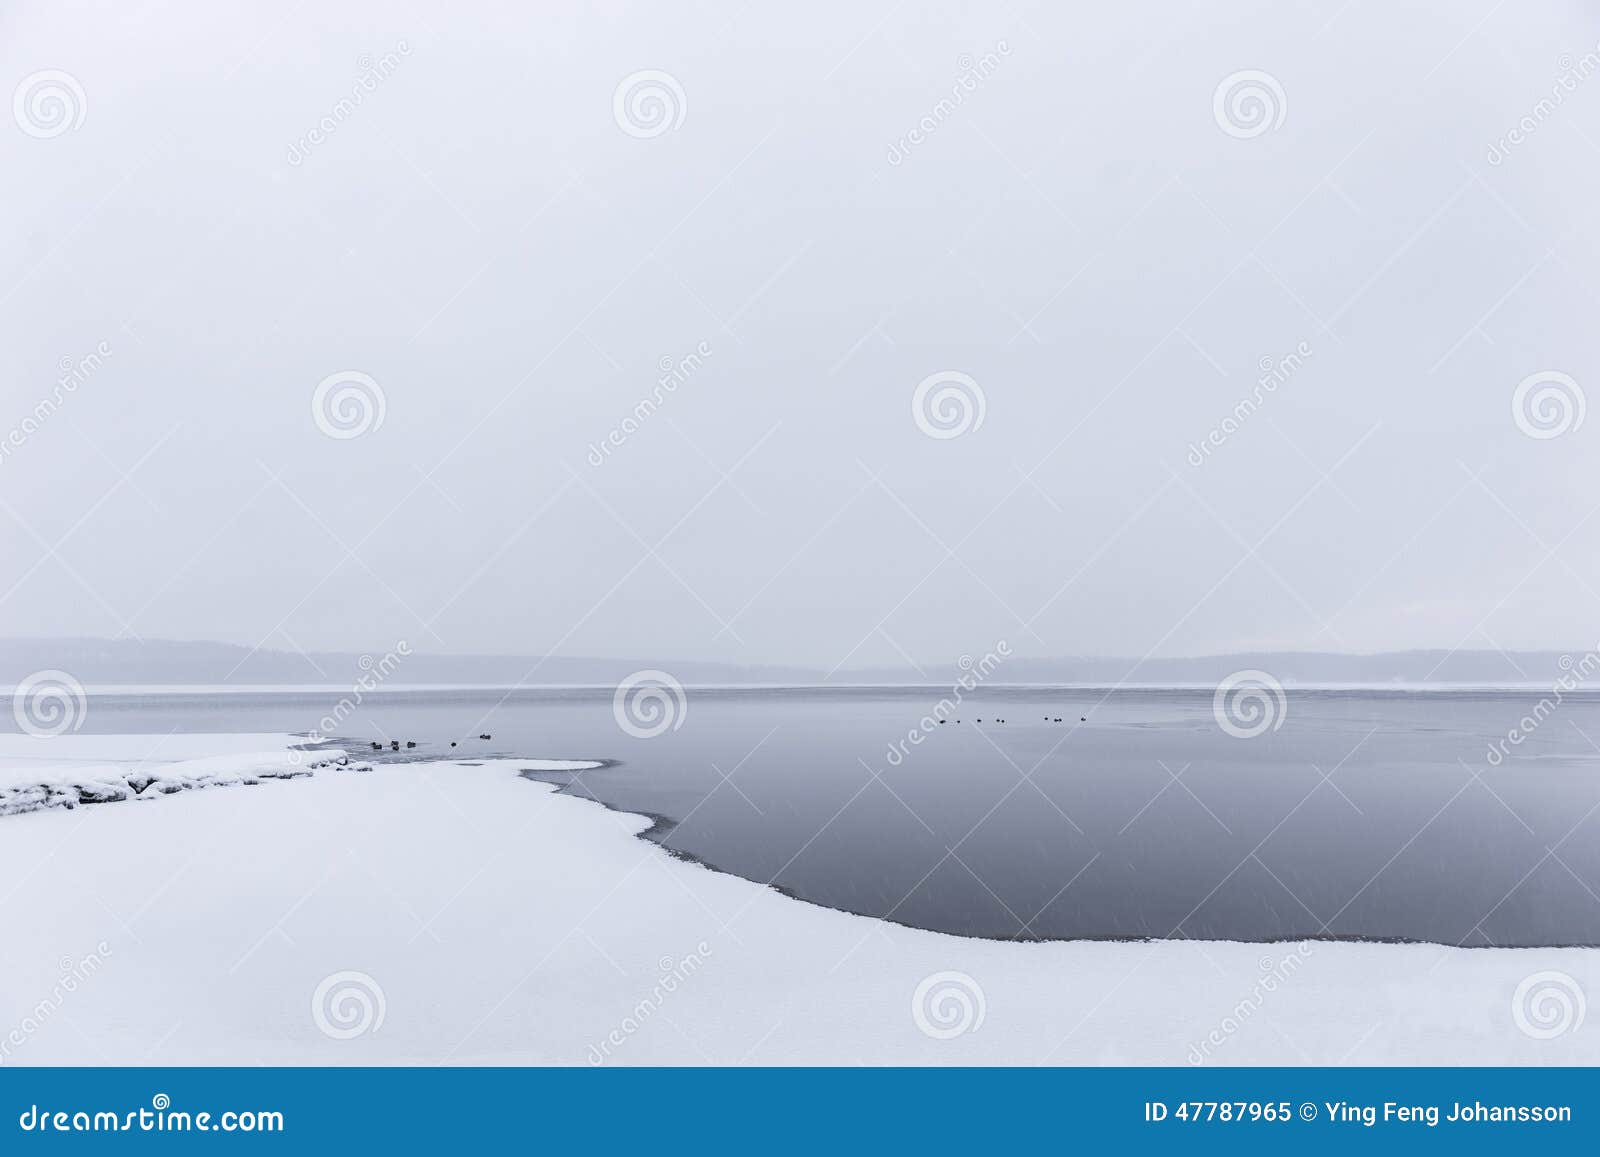 sparse winter landscape